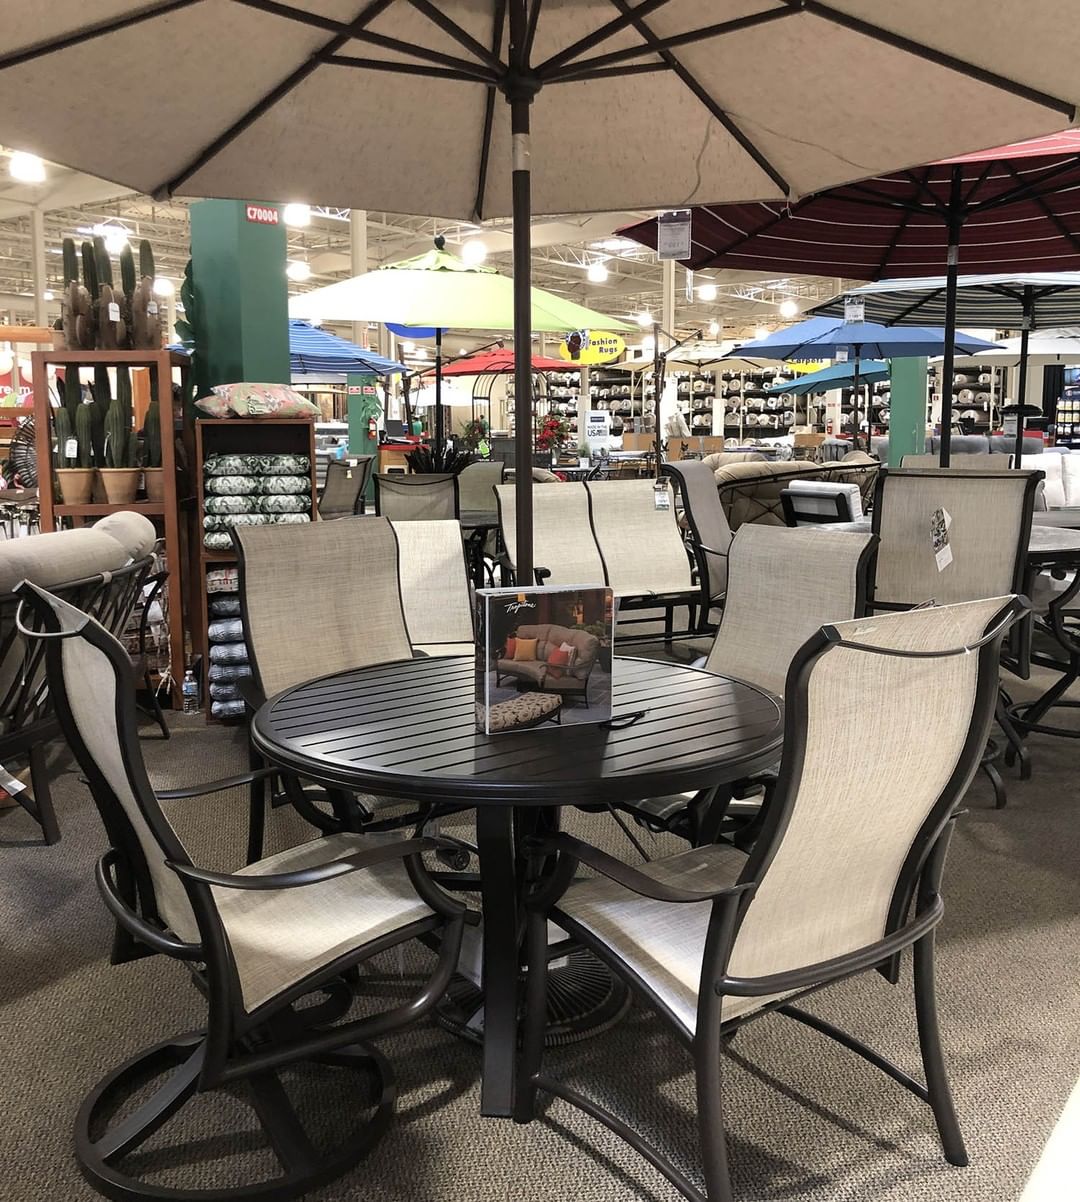 Outdoor patio dining set at Nebraska Furniture Mart. Photo by Instagram user @nfmpics